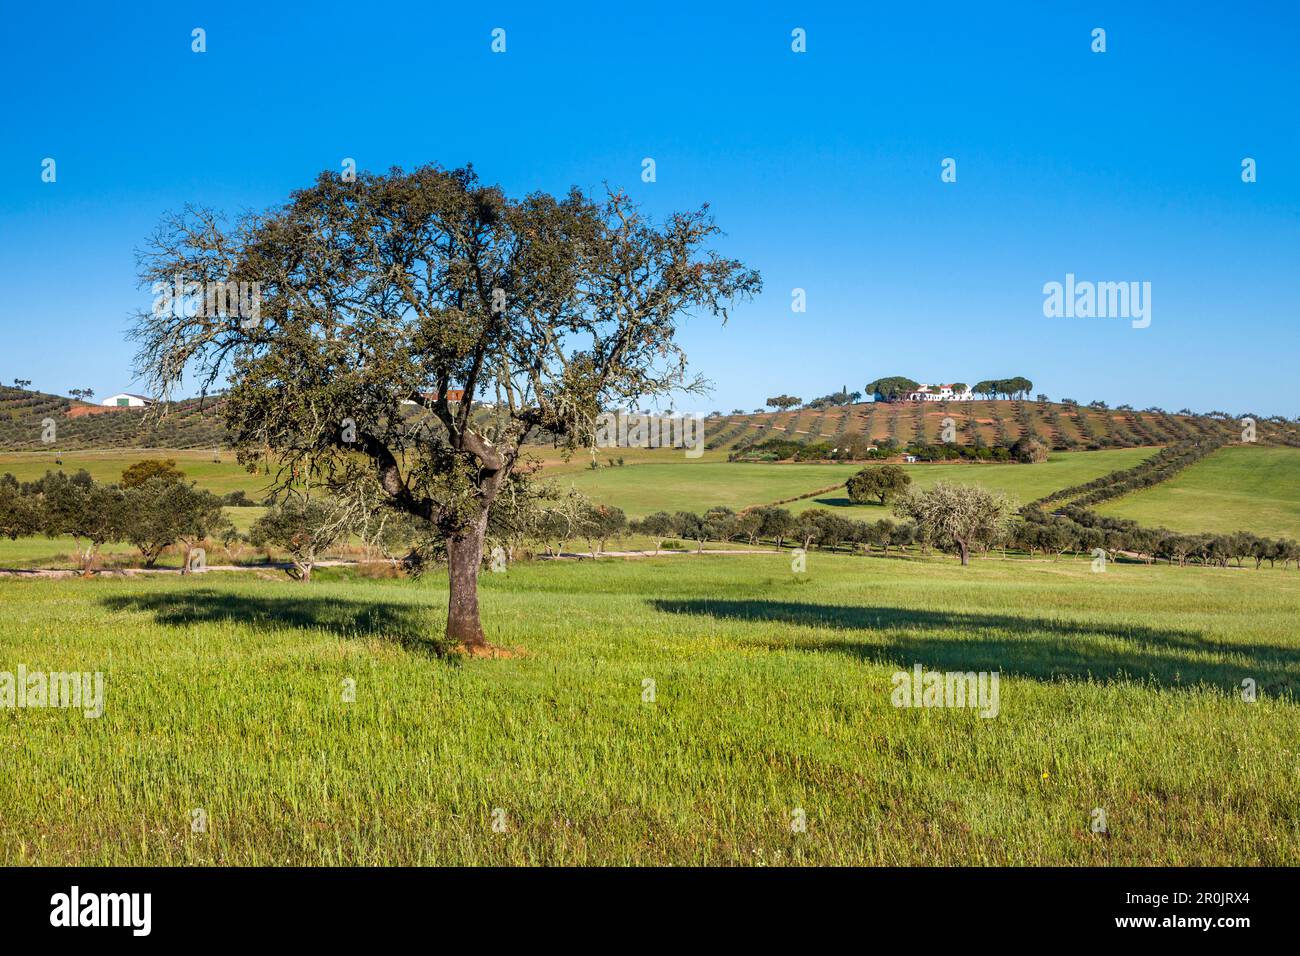 Cork oaks and finca near Beja, Korkeichen, Alentejo, Portugal Stock Photo